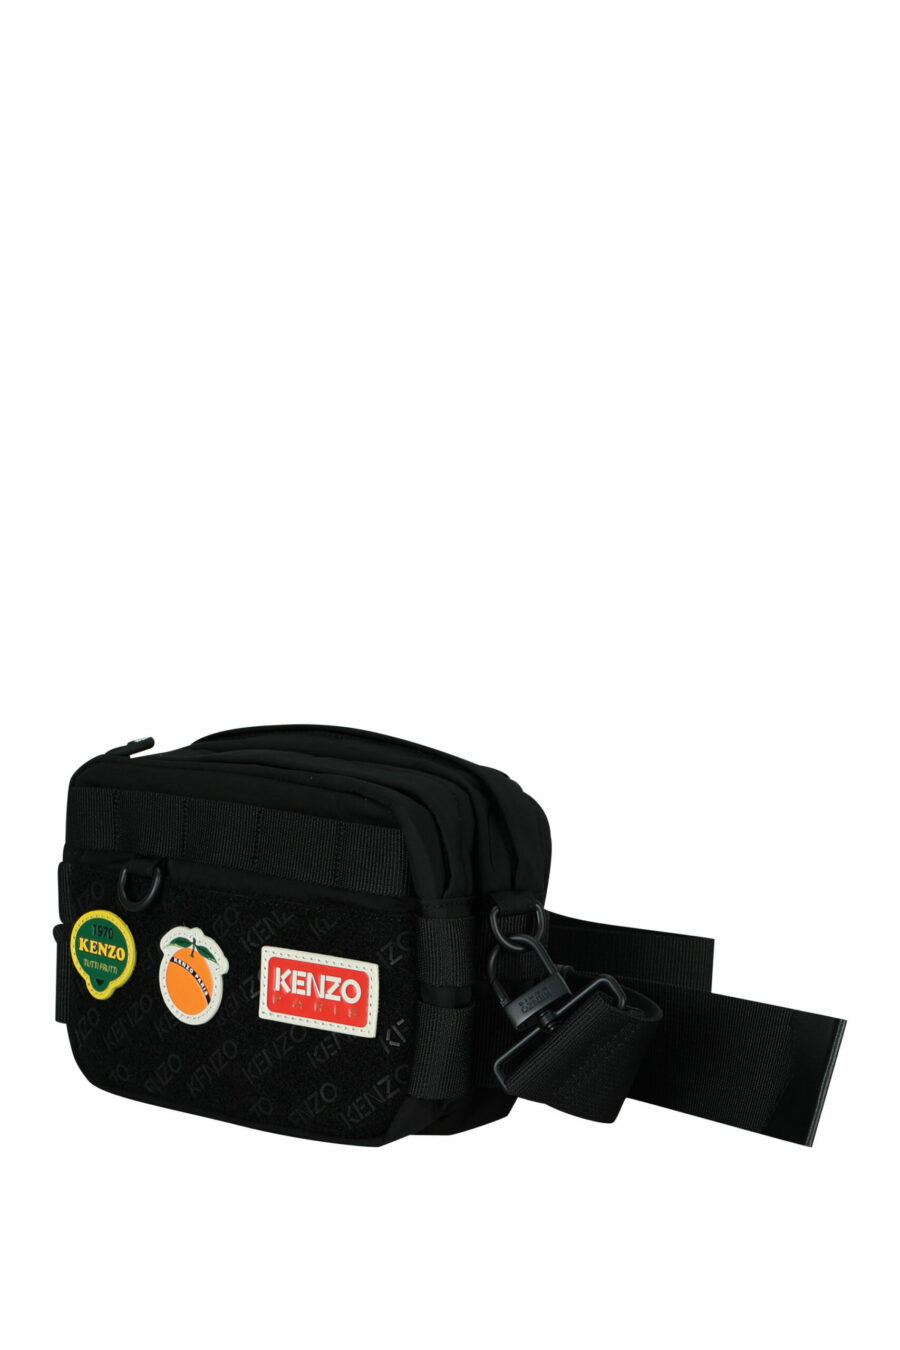 Black crossbody bag with "kenzo jungle" logo - 3612230603738 1 scaled